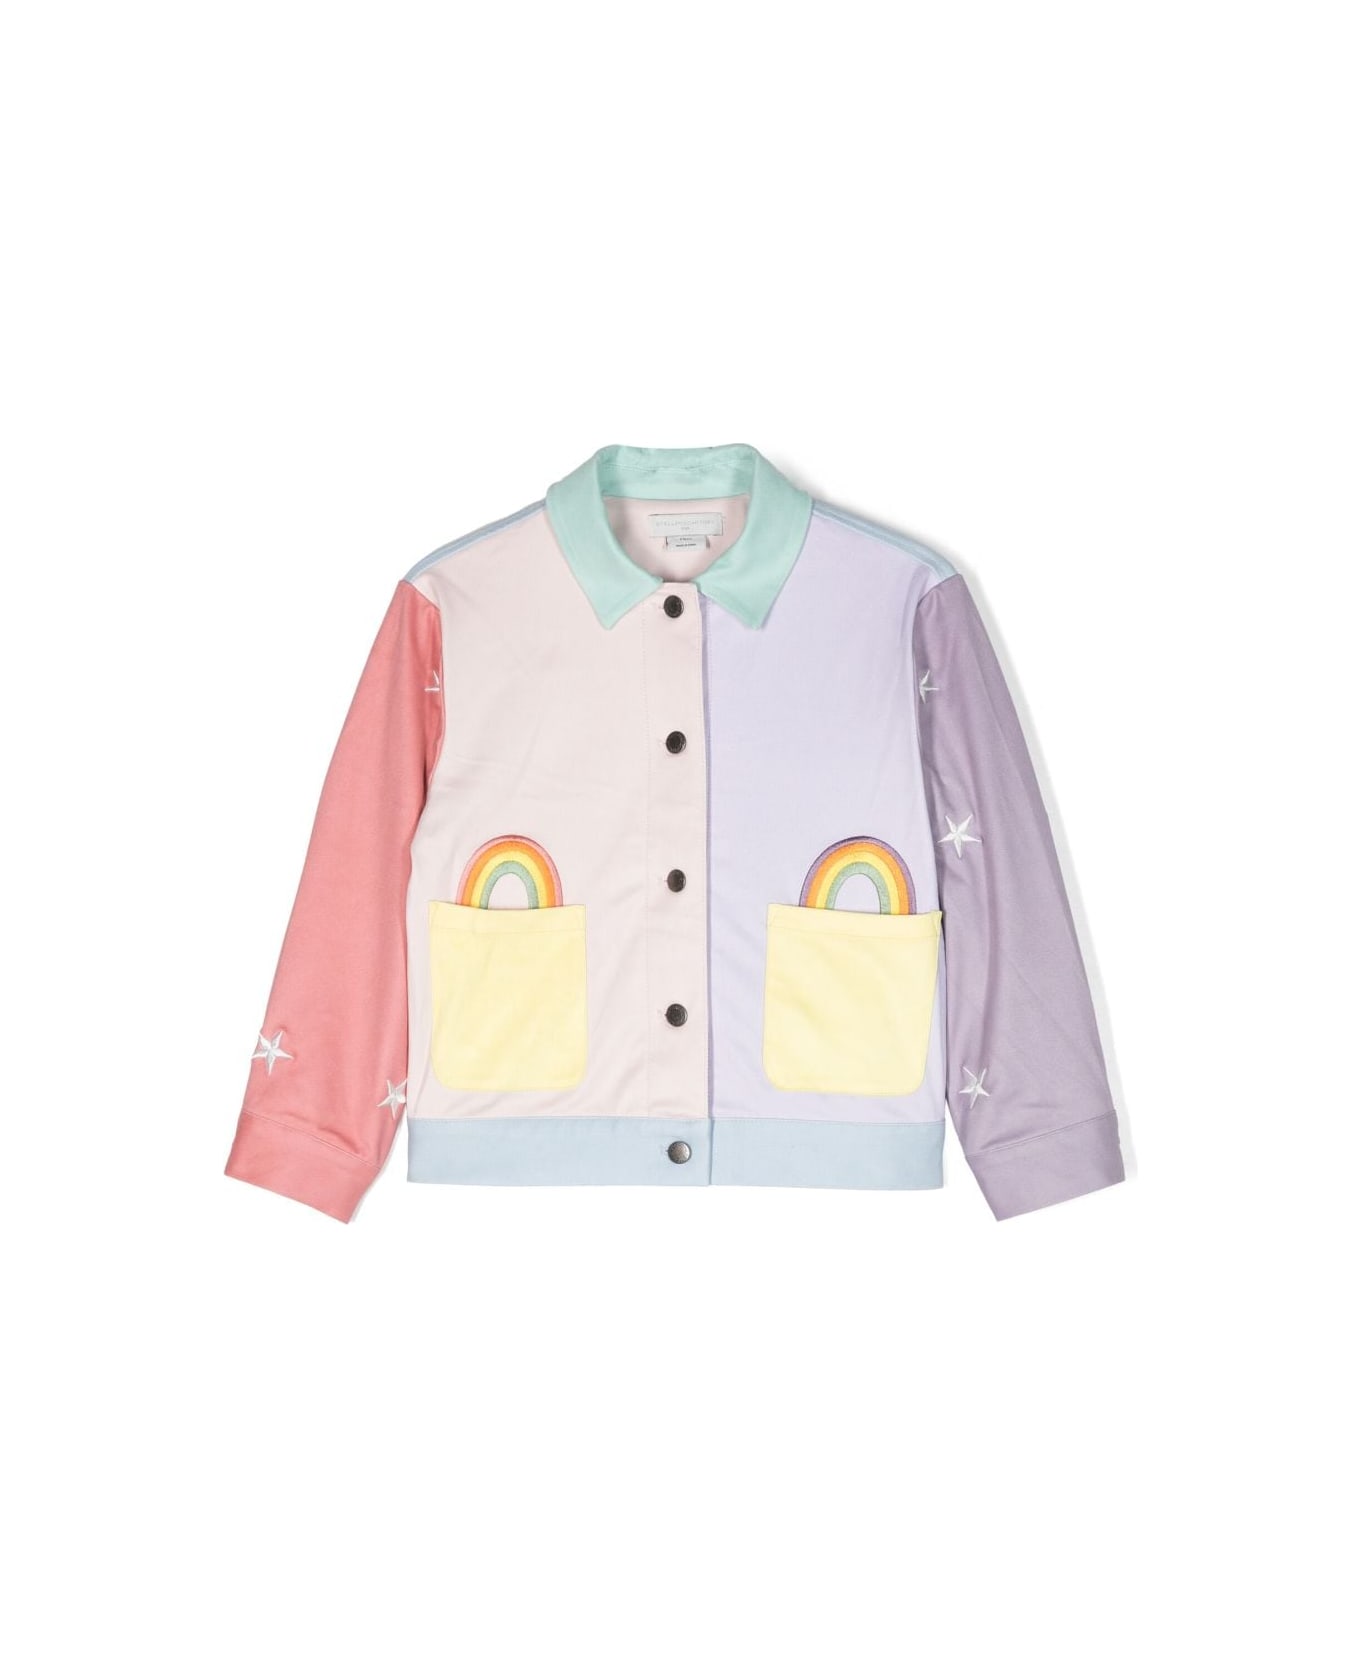 Stella McCartney Kids Jacket - Colorful